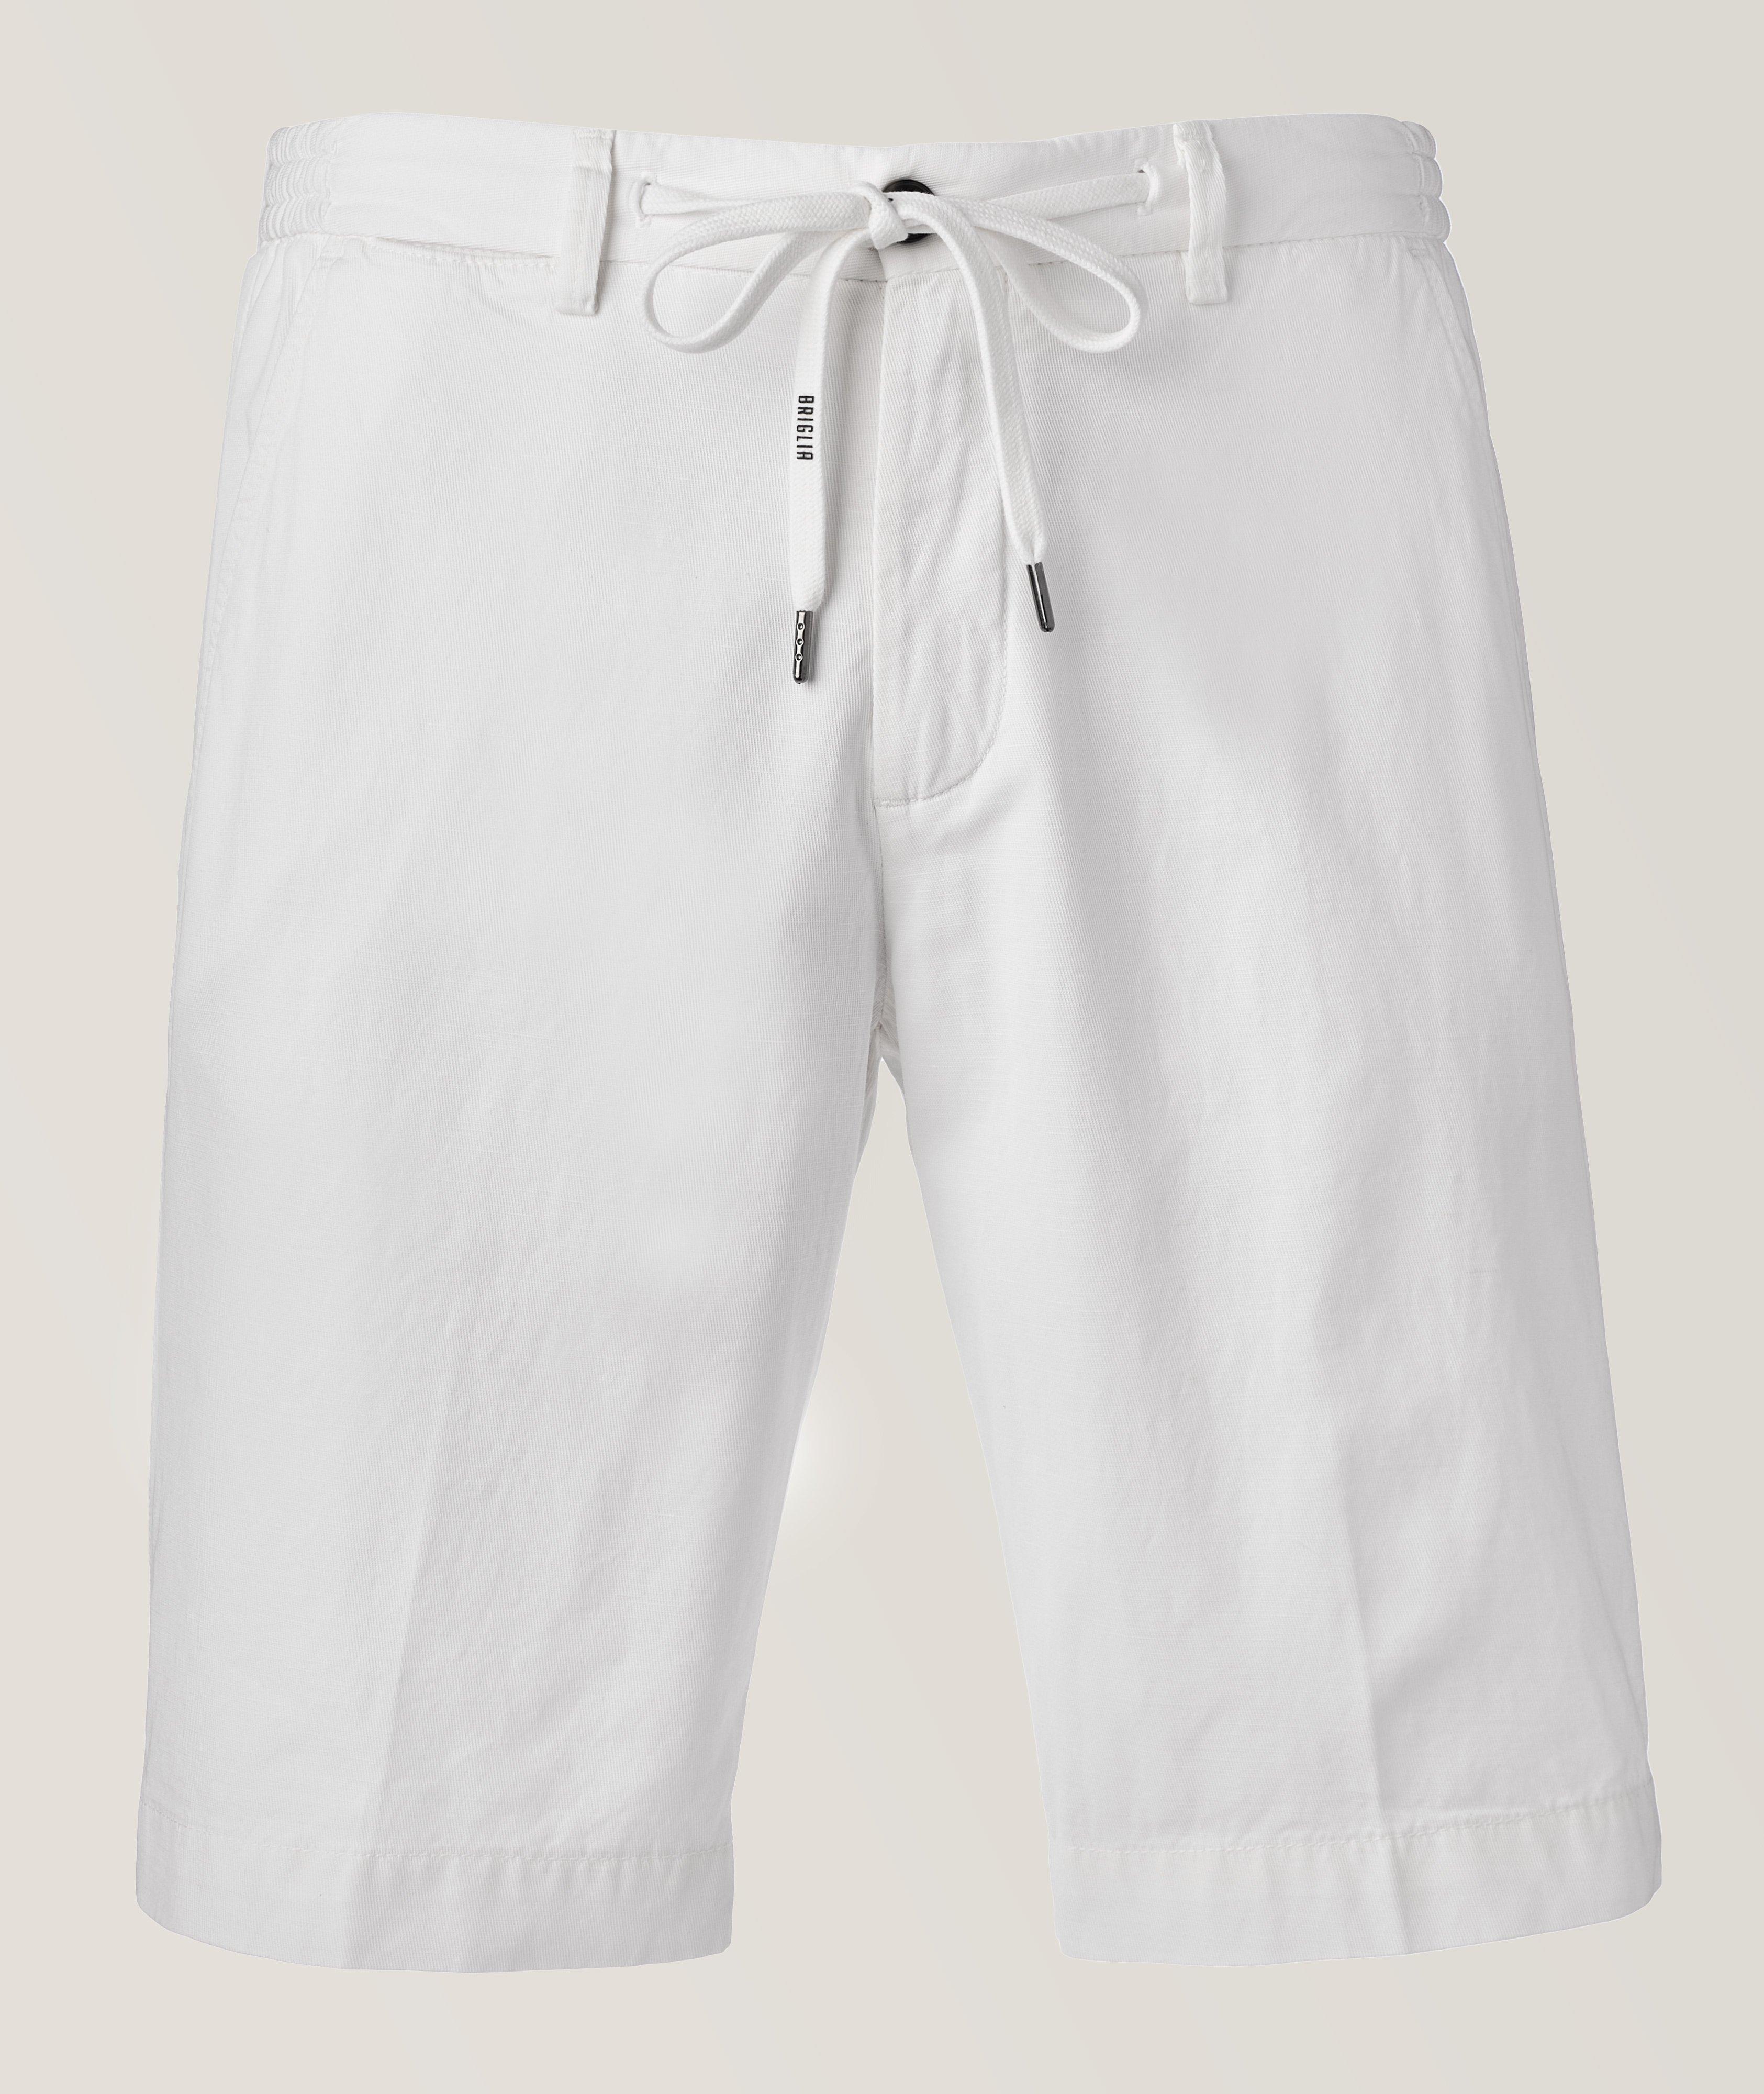 Malibu Cotton-Blend Drawstring Shorts image 0